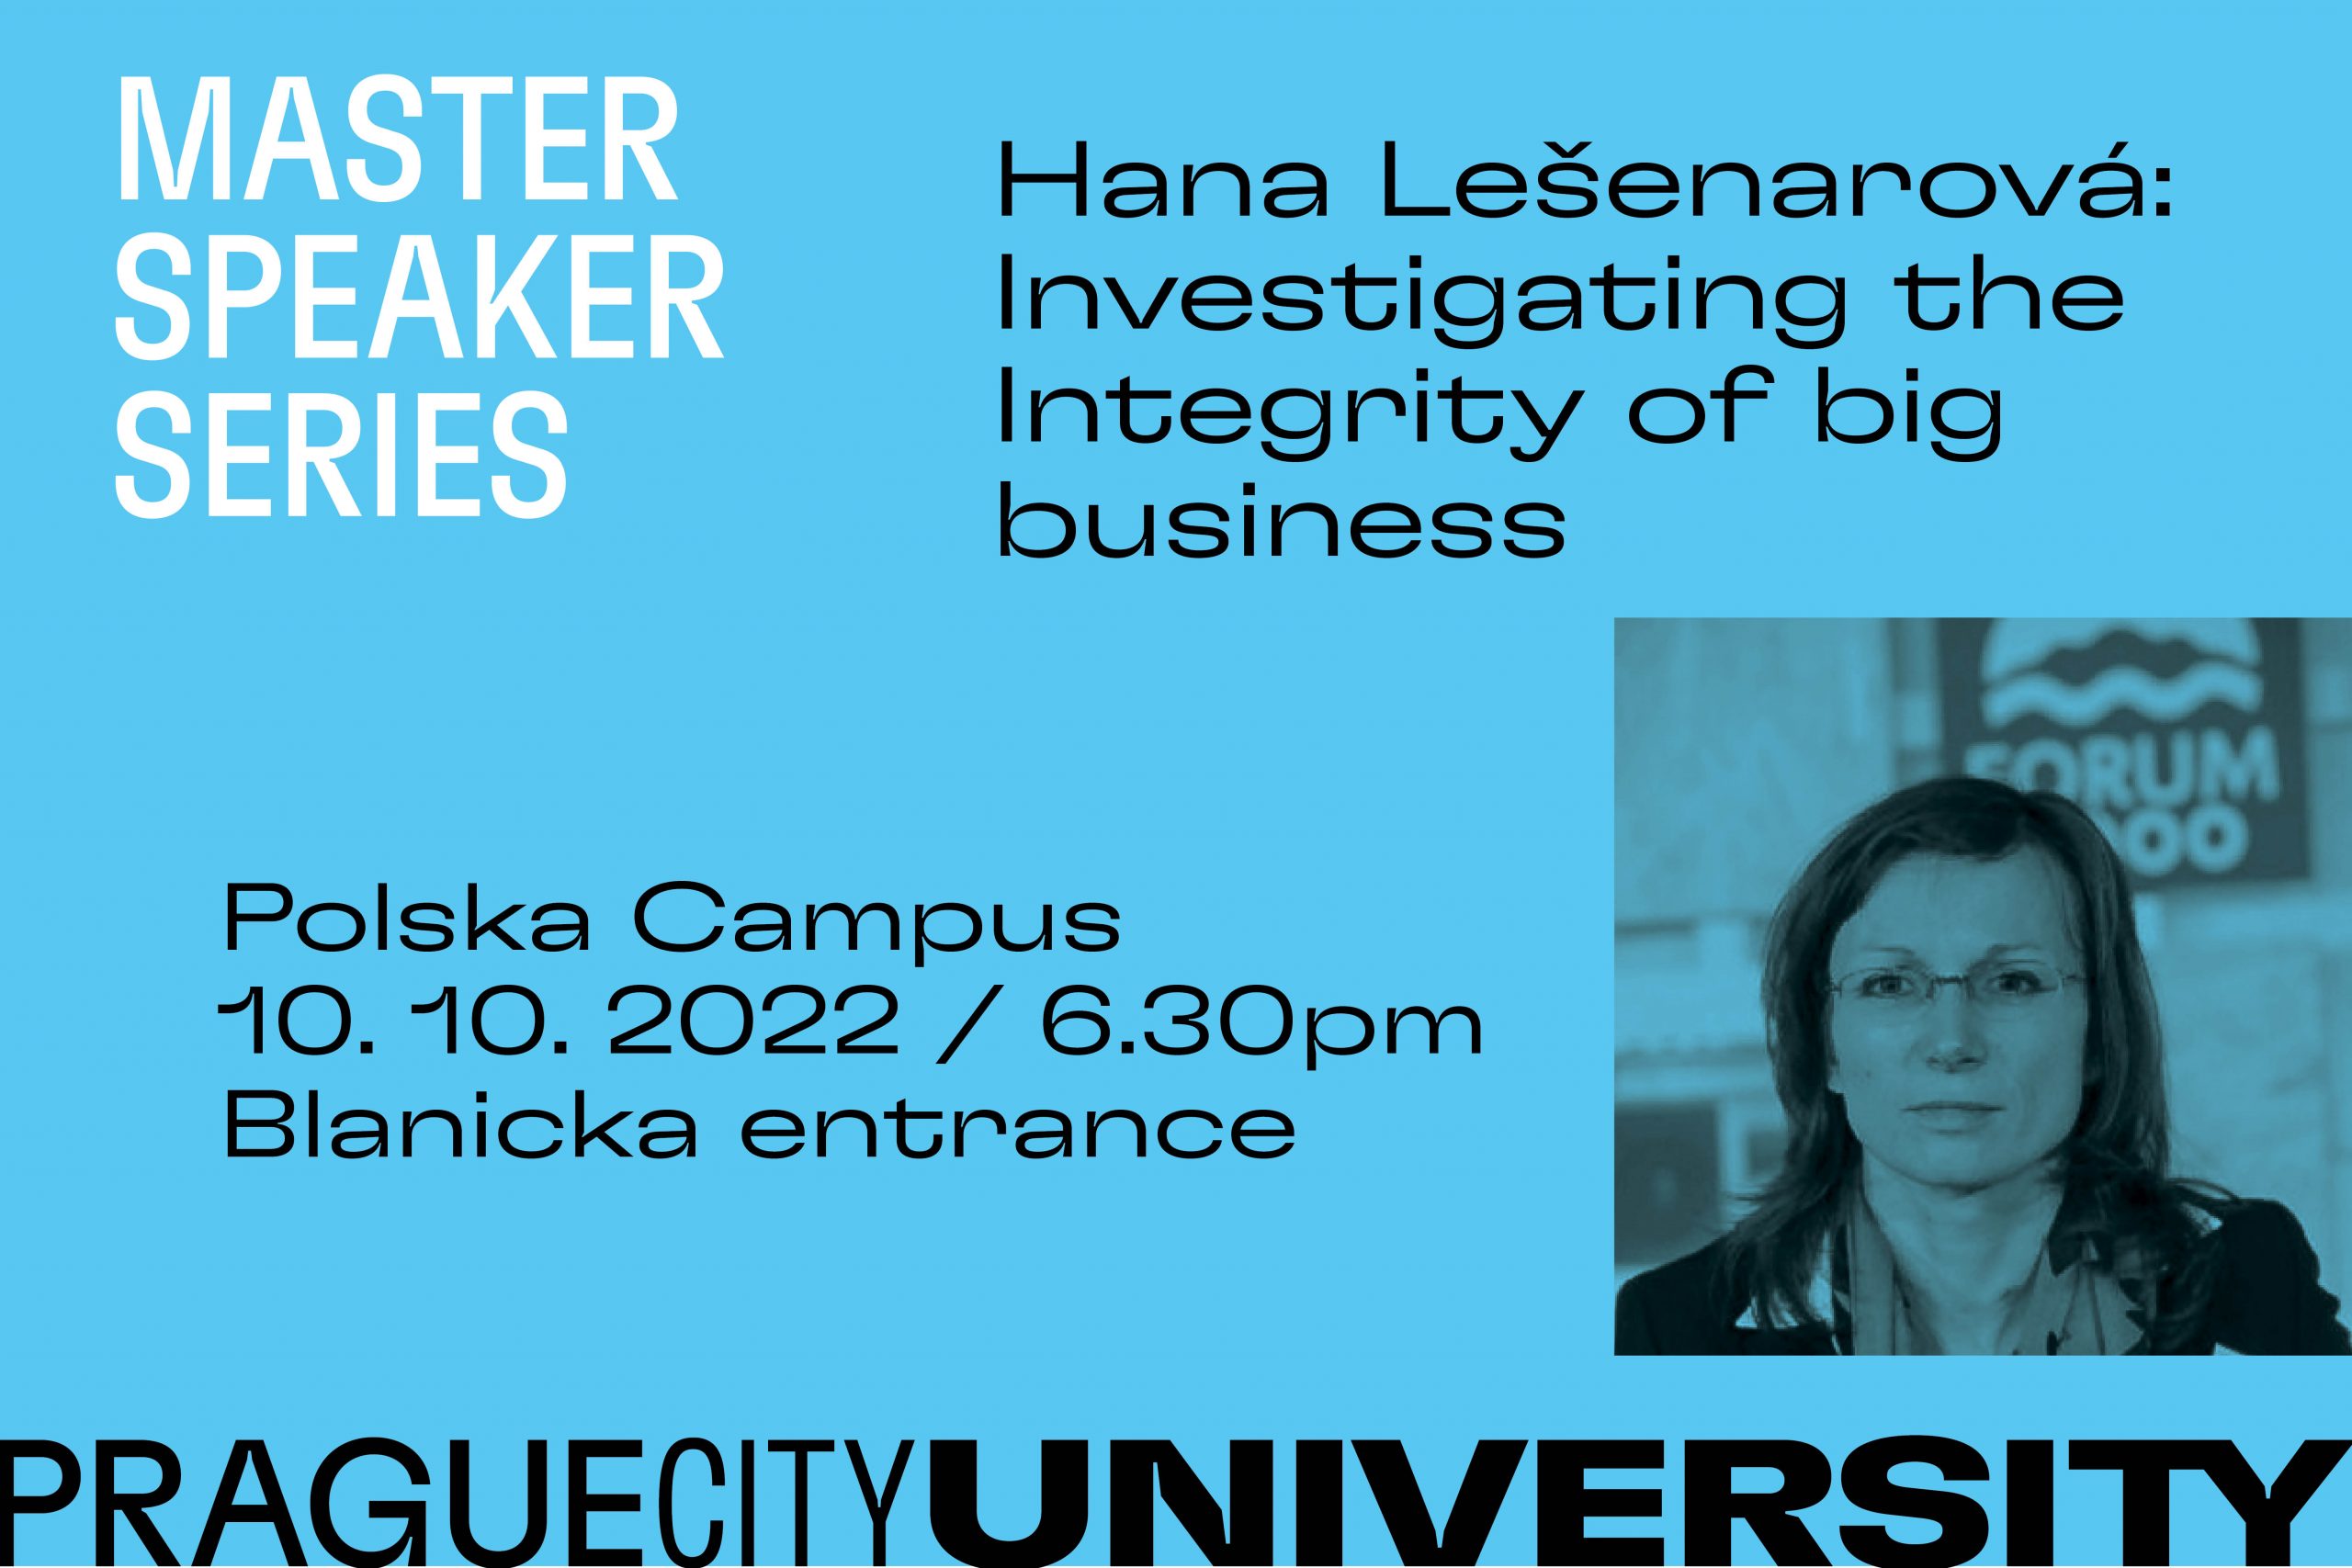 Master Speaker Series: Hana Lesenarova